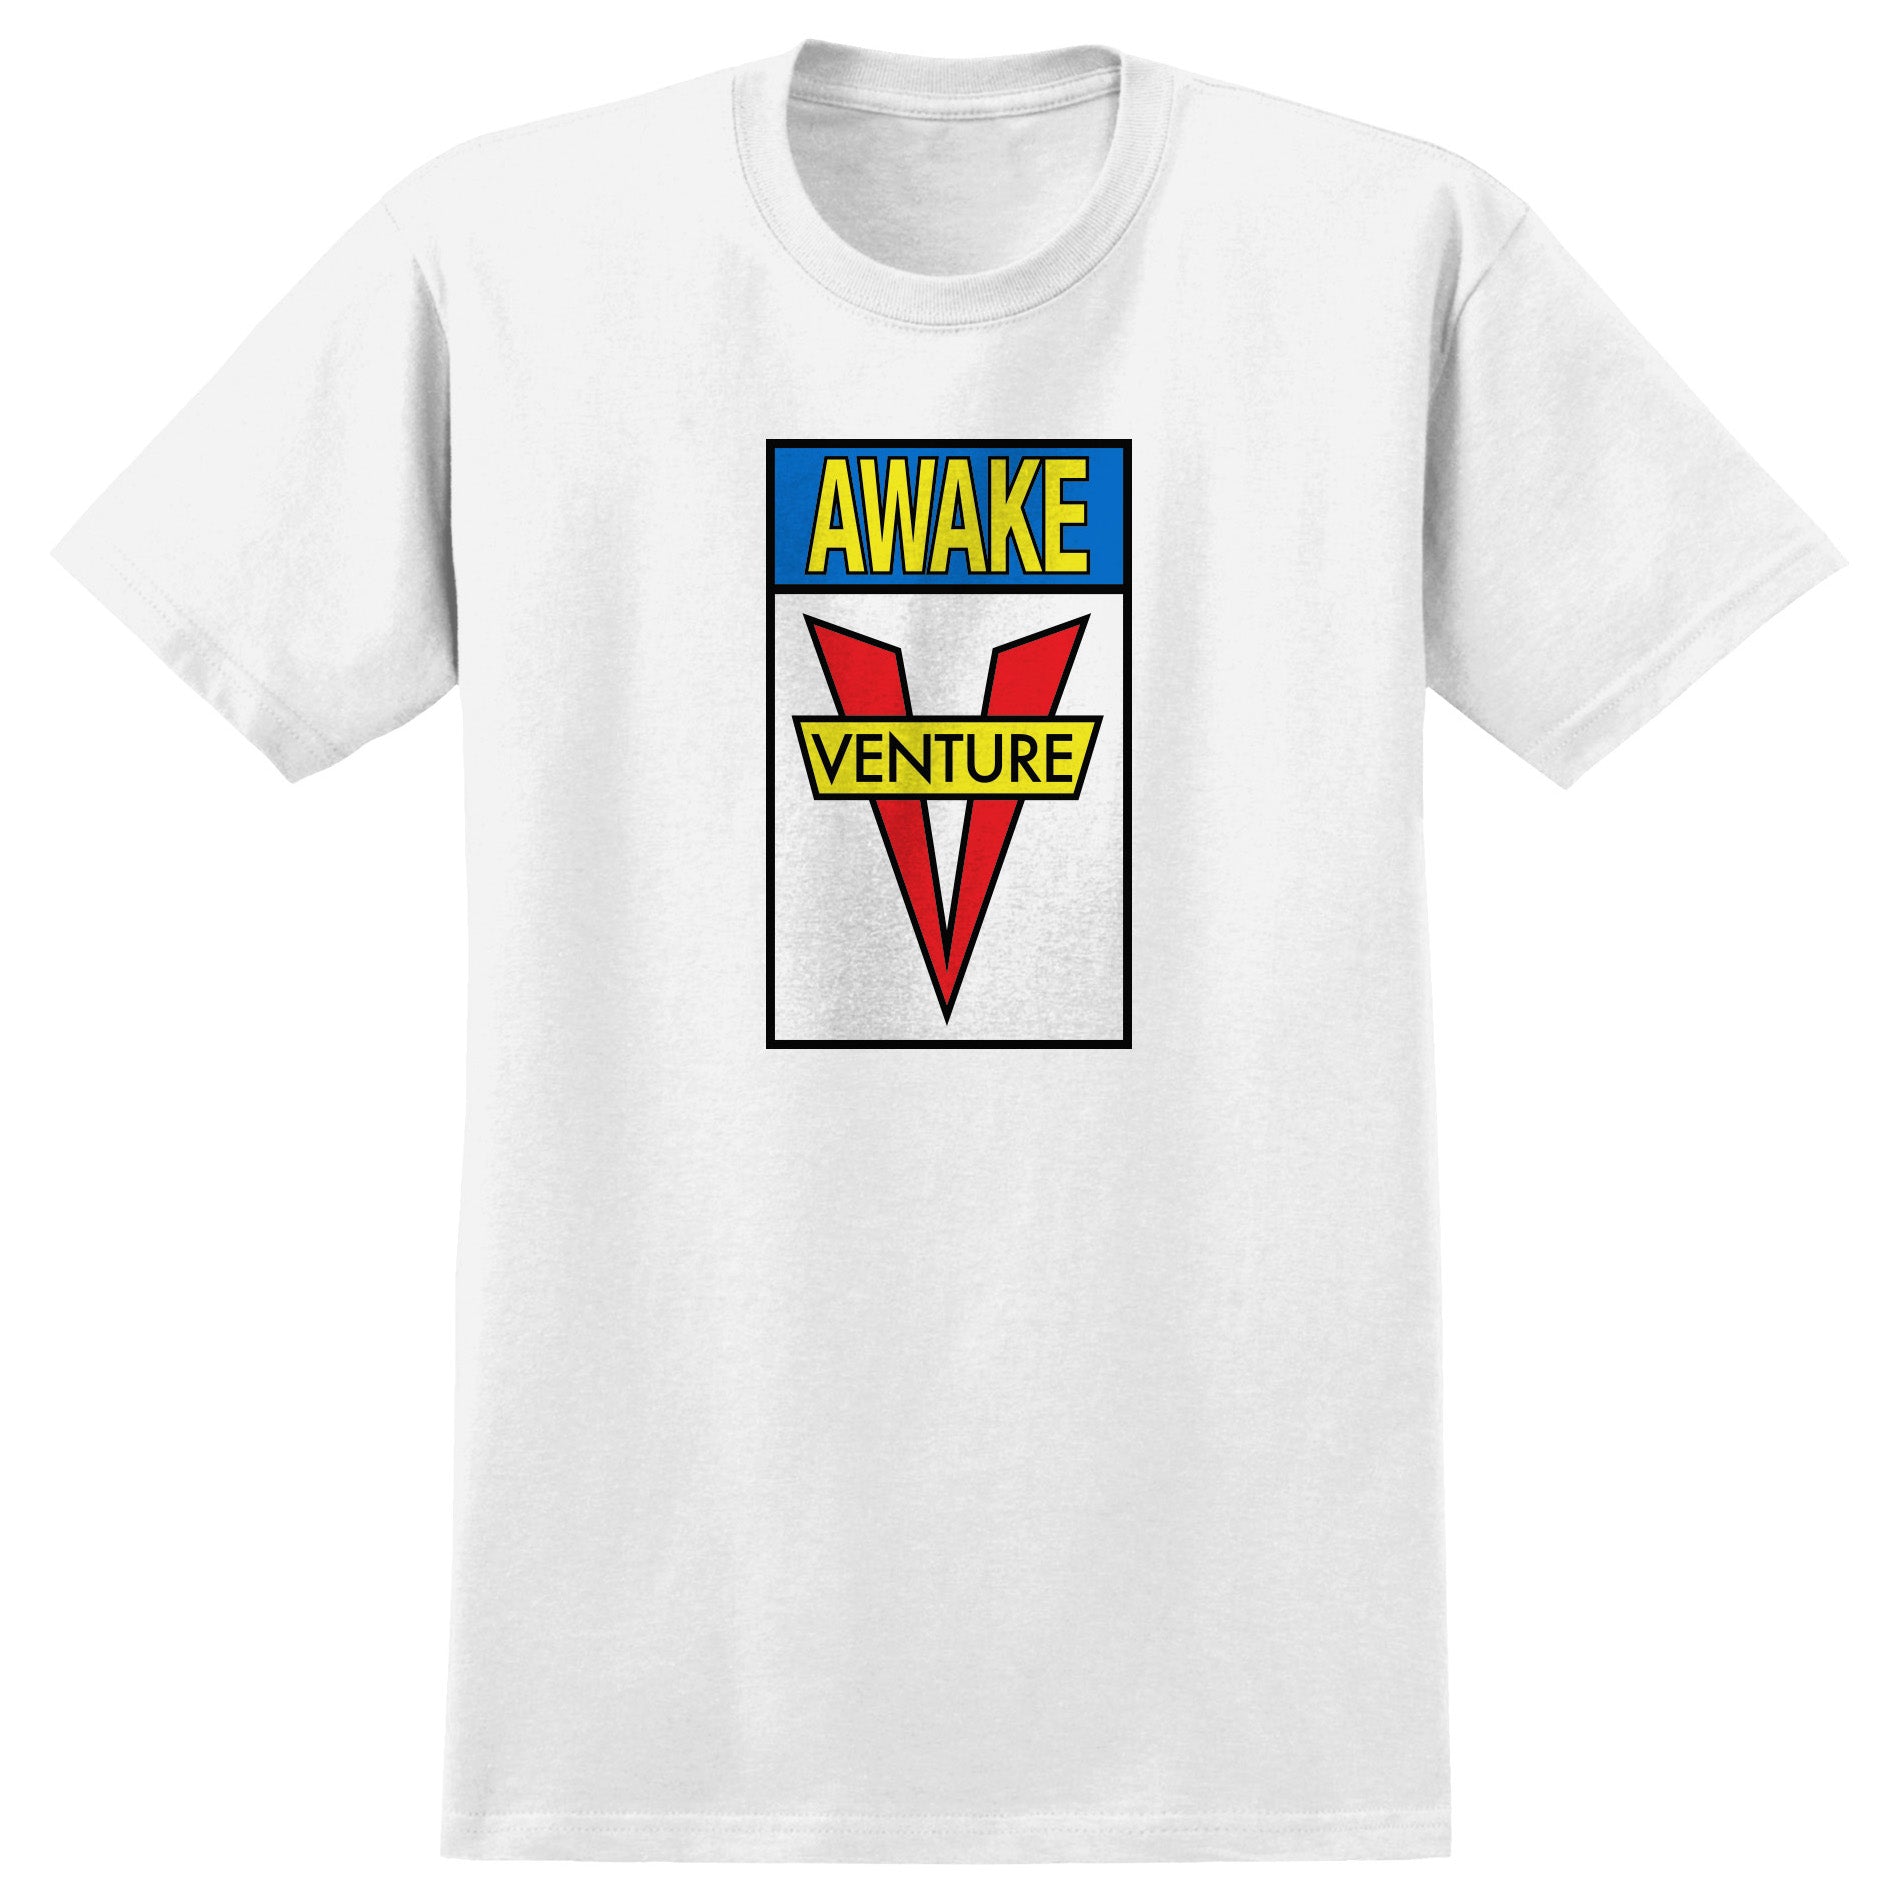 Awake S/S Tee - White